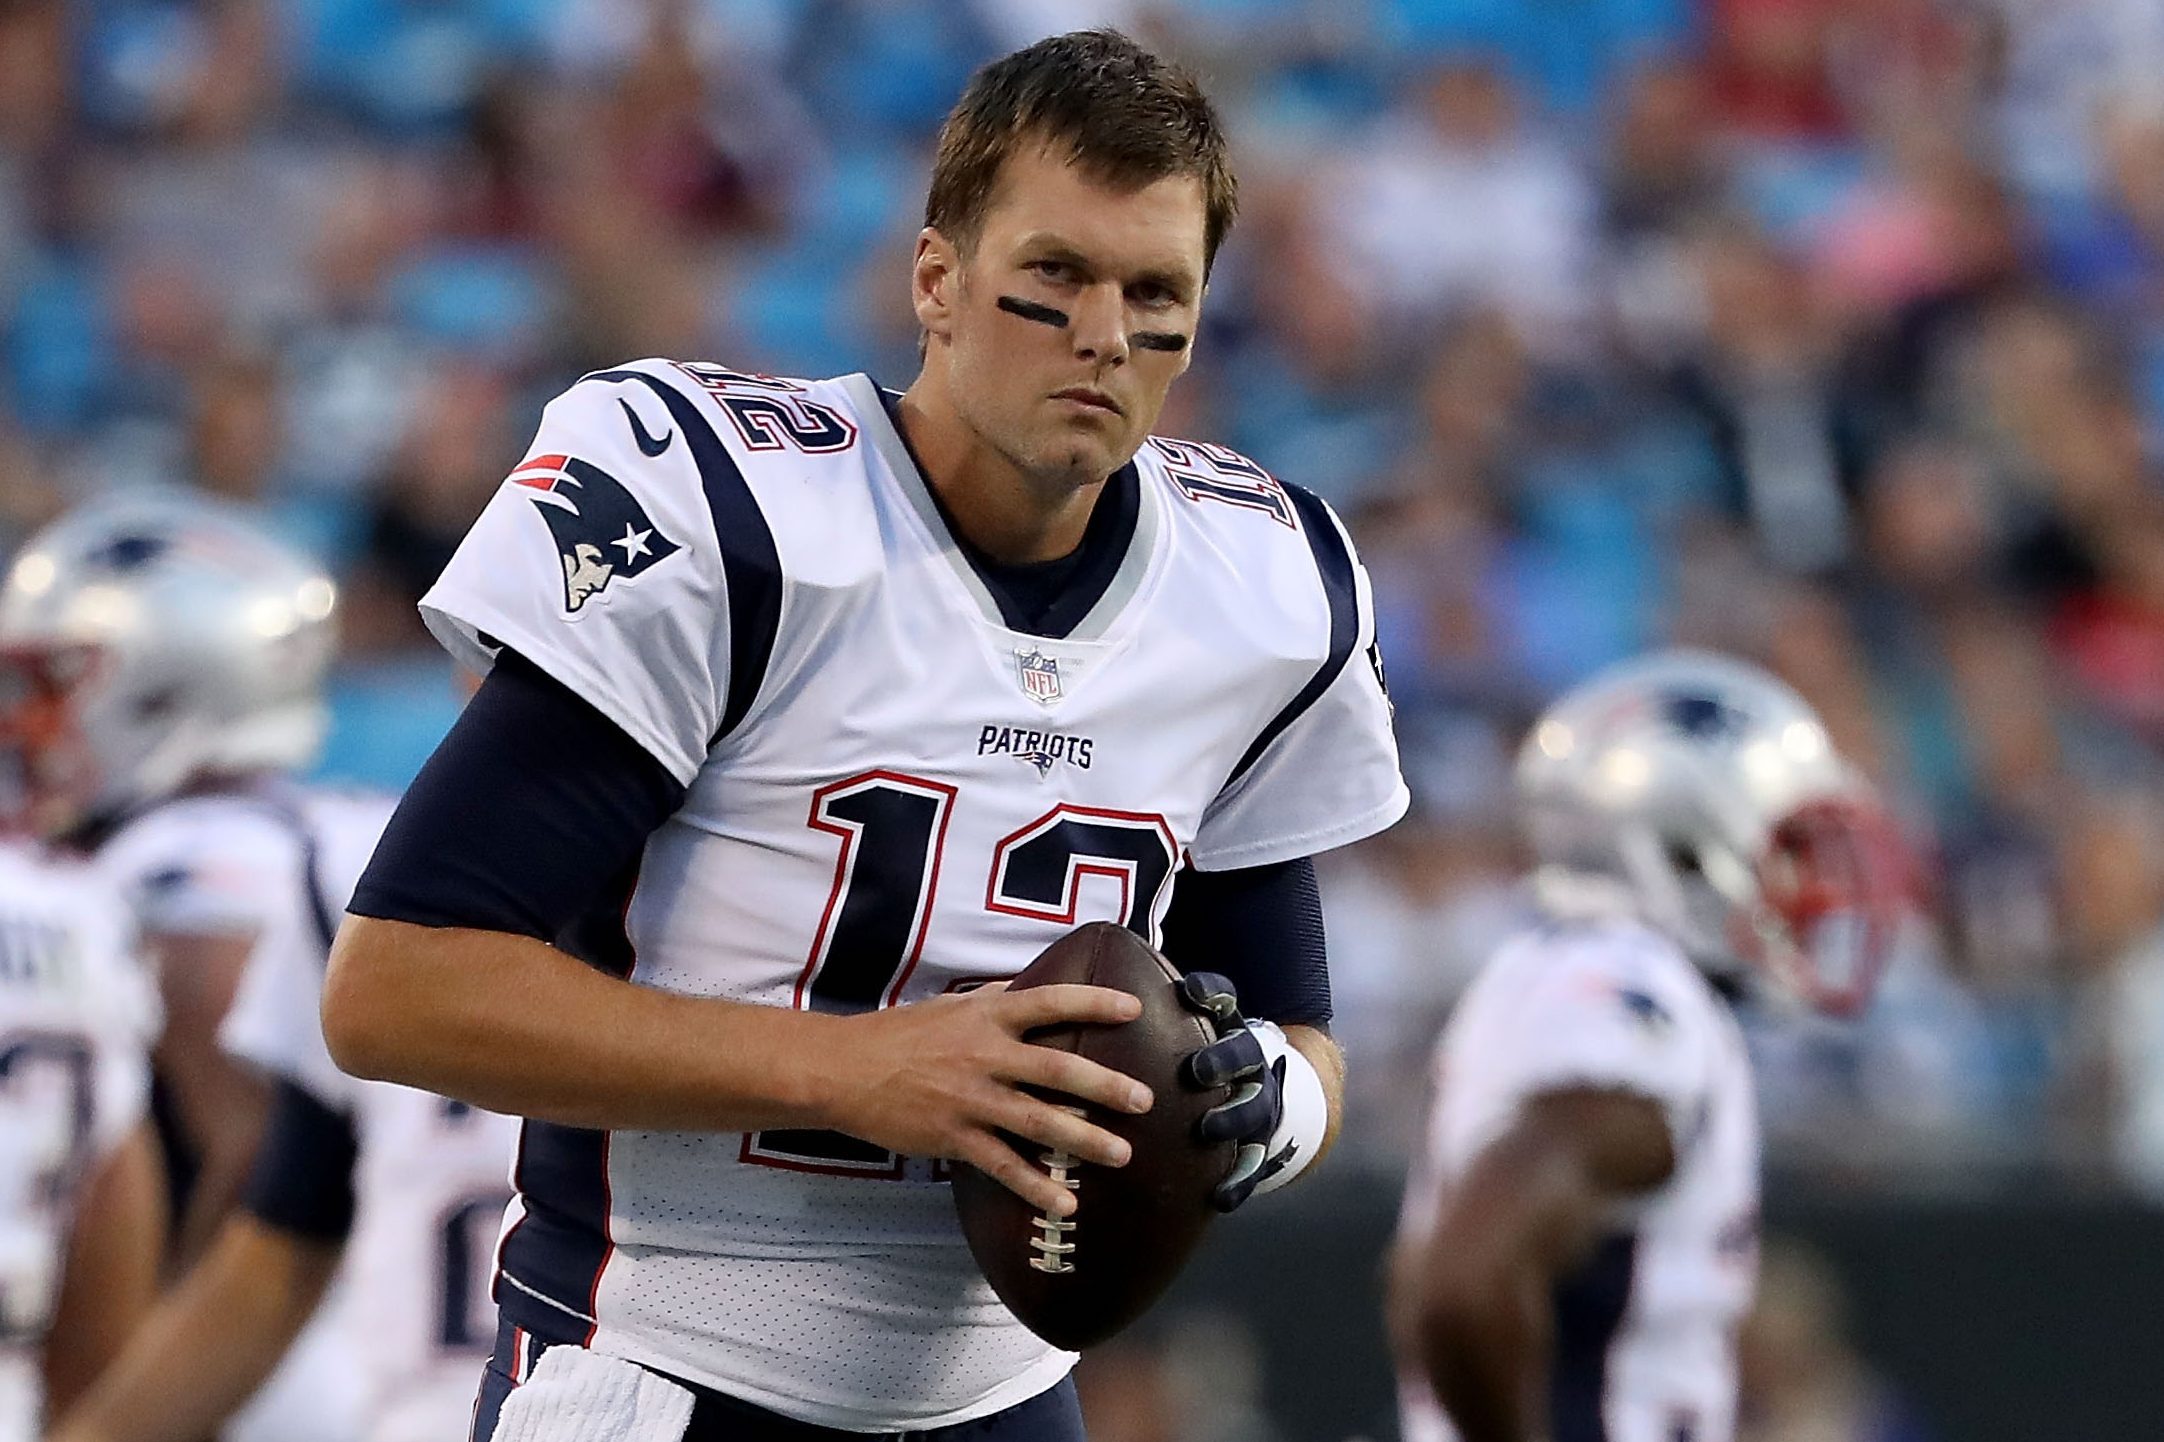 NFL Draft: Picking the Most Tom Brady-like Player - InsideHook